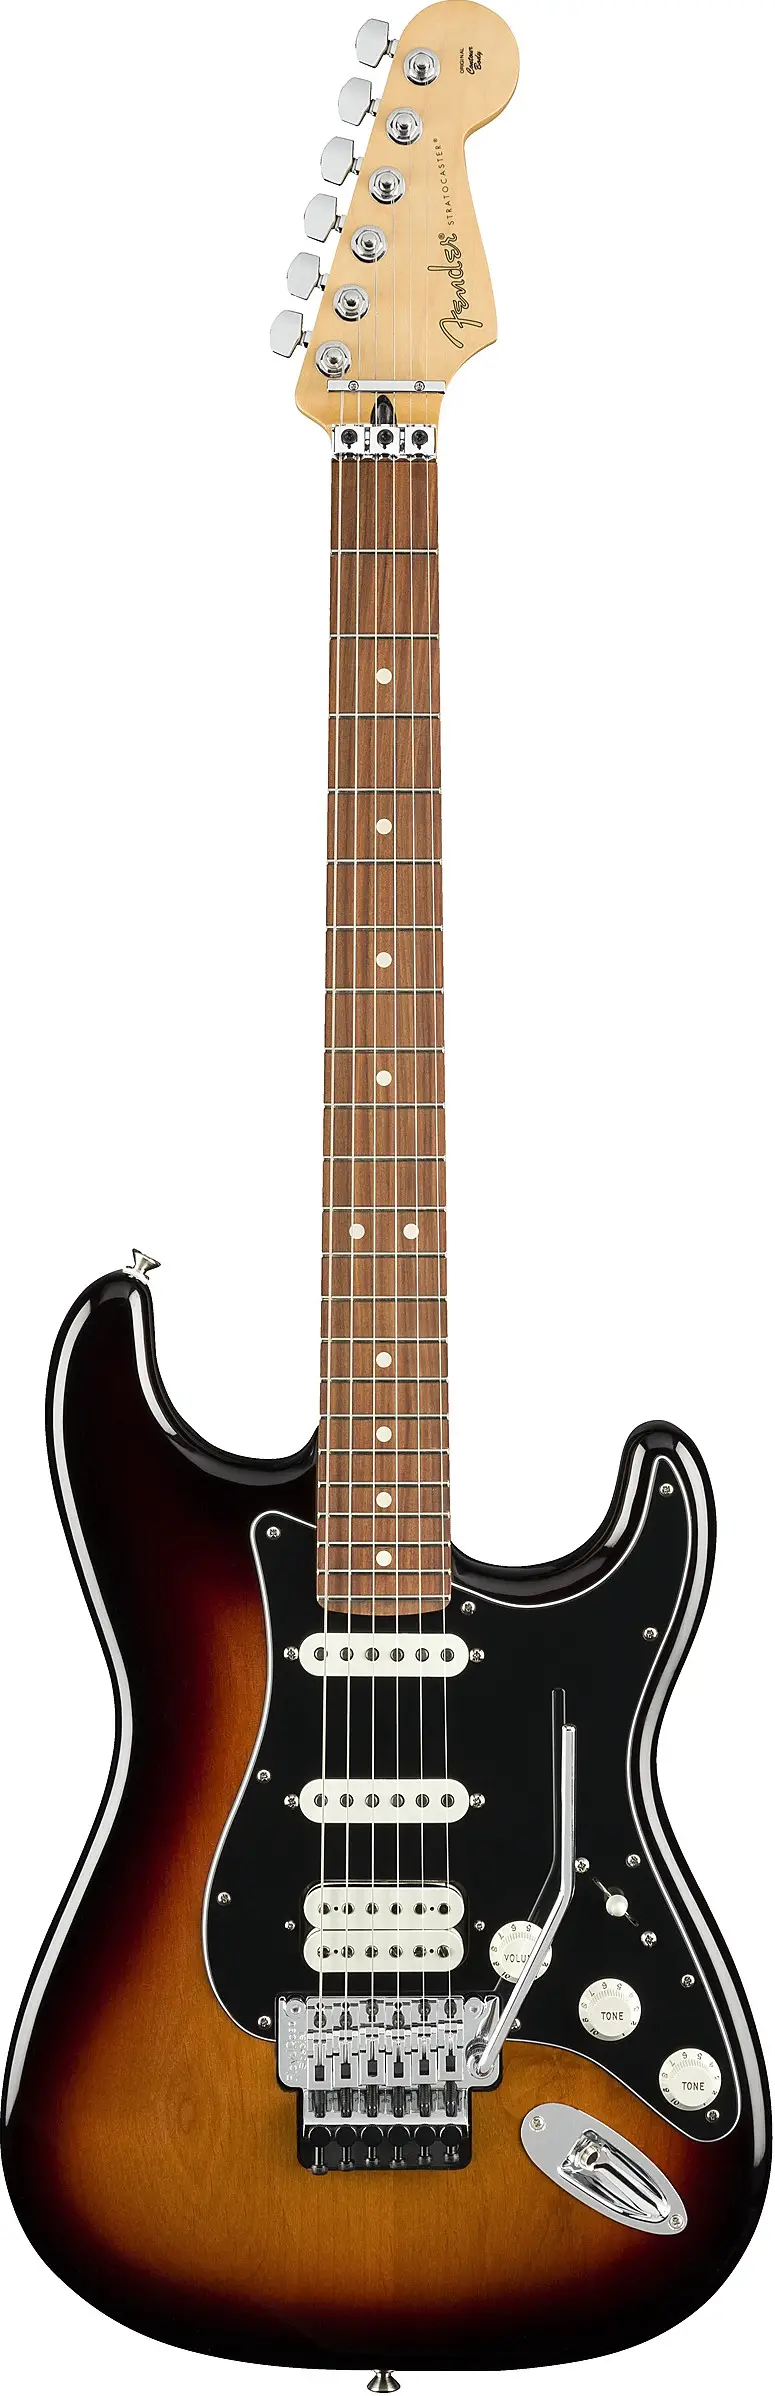 Player Stratocaster Floyd Rose HSS by Fender